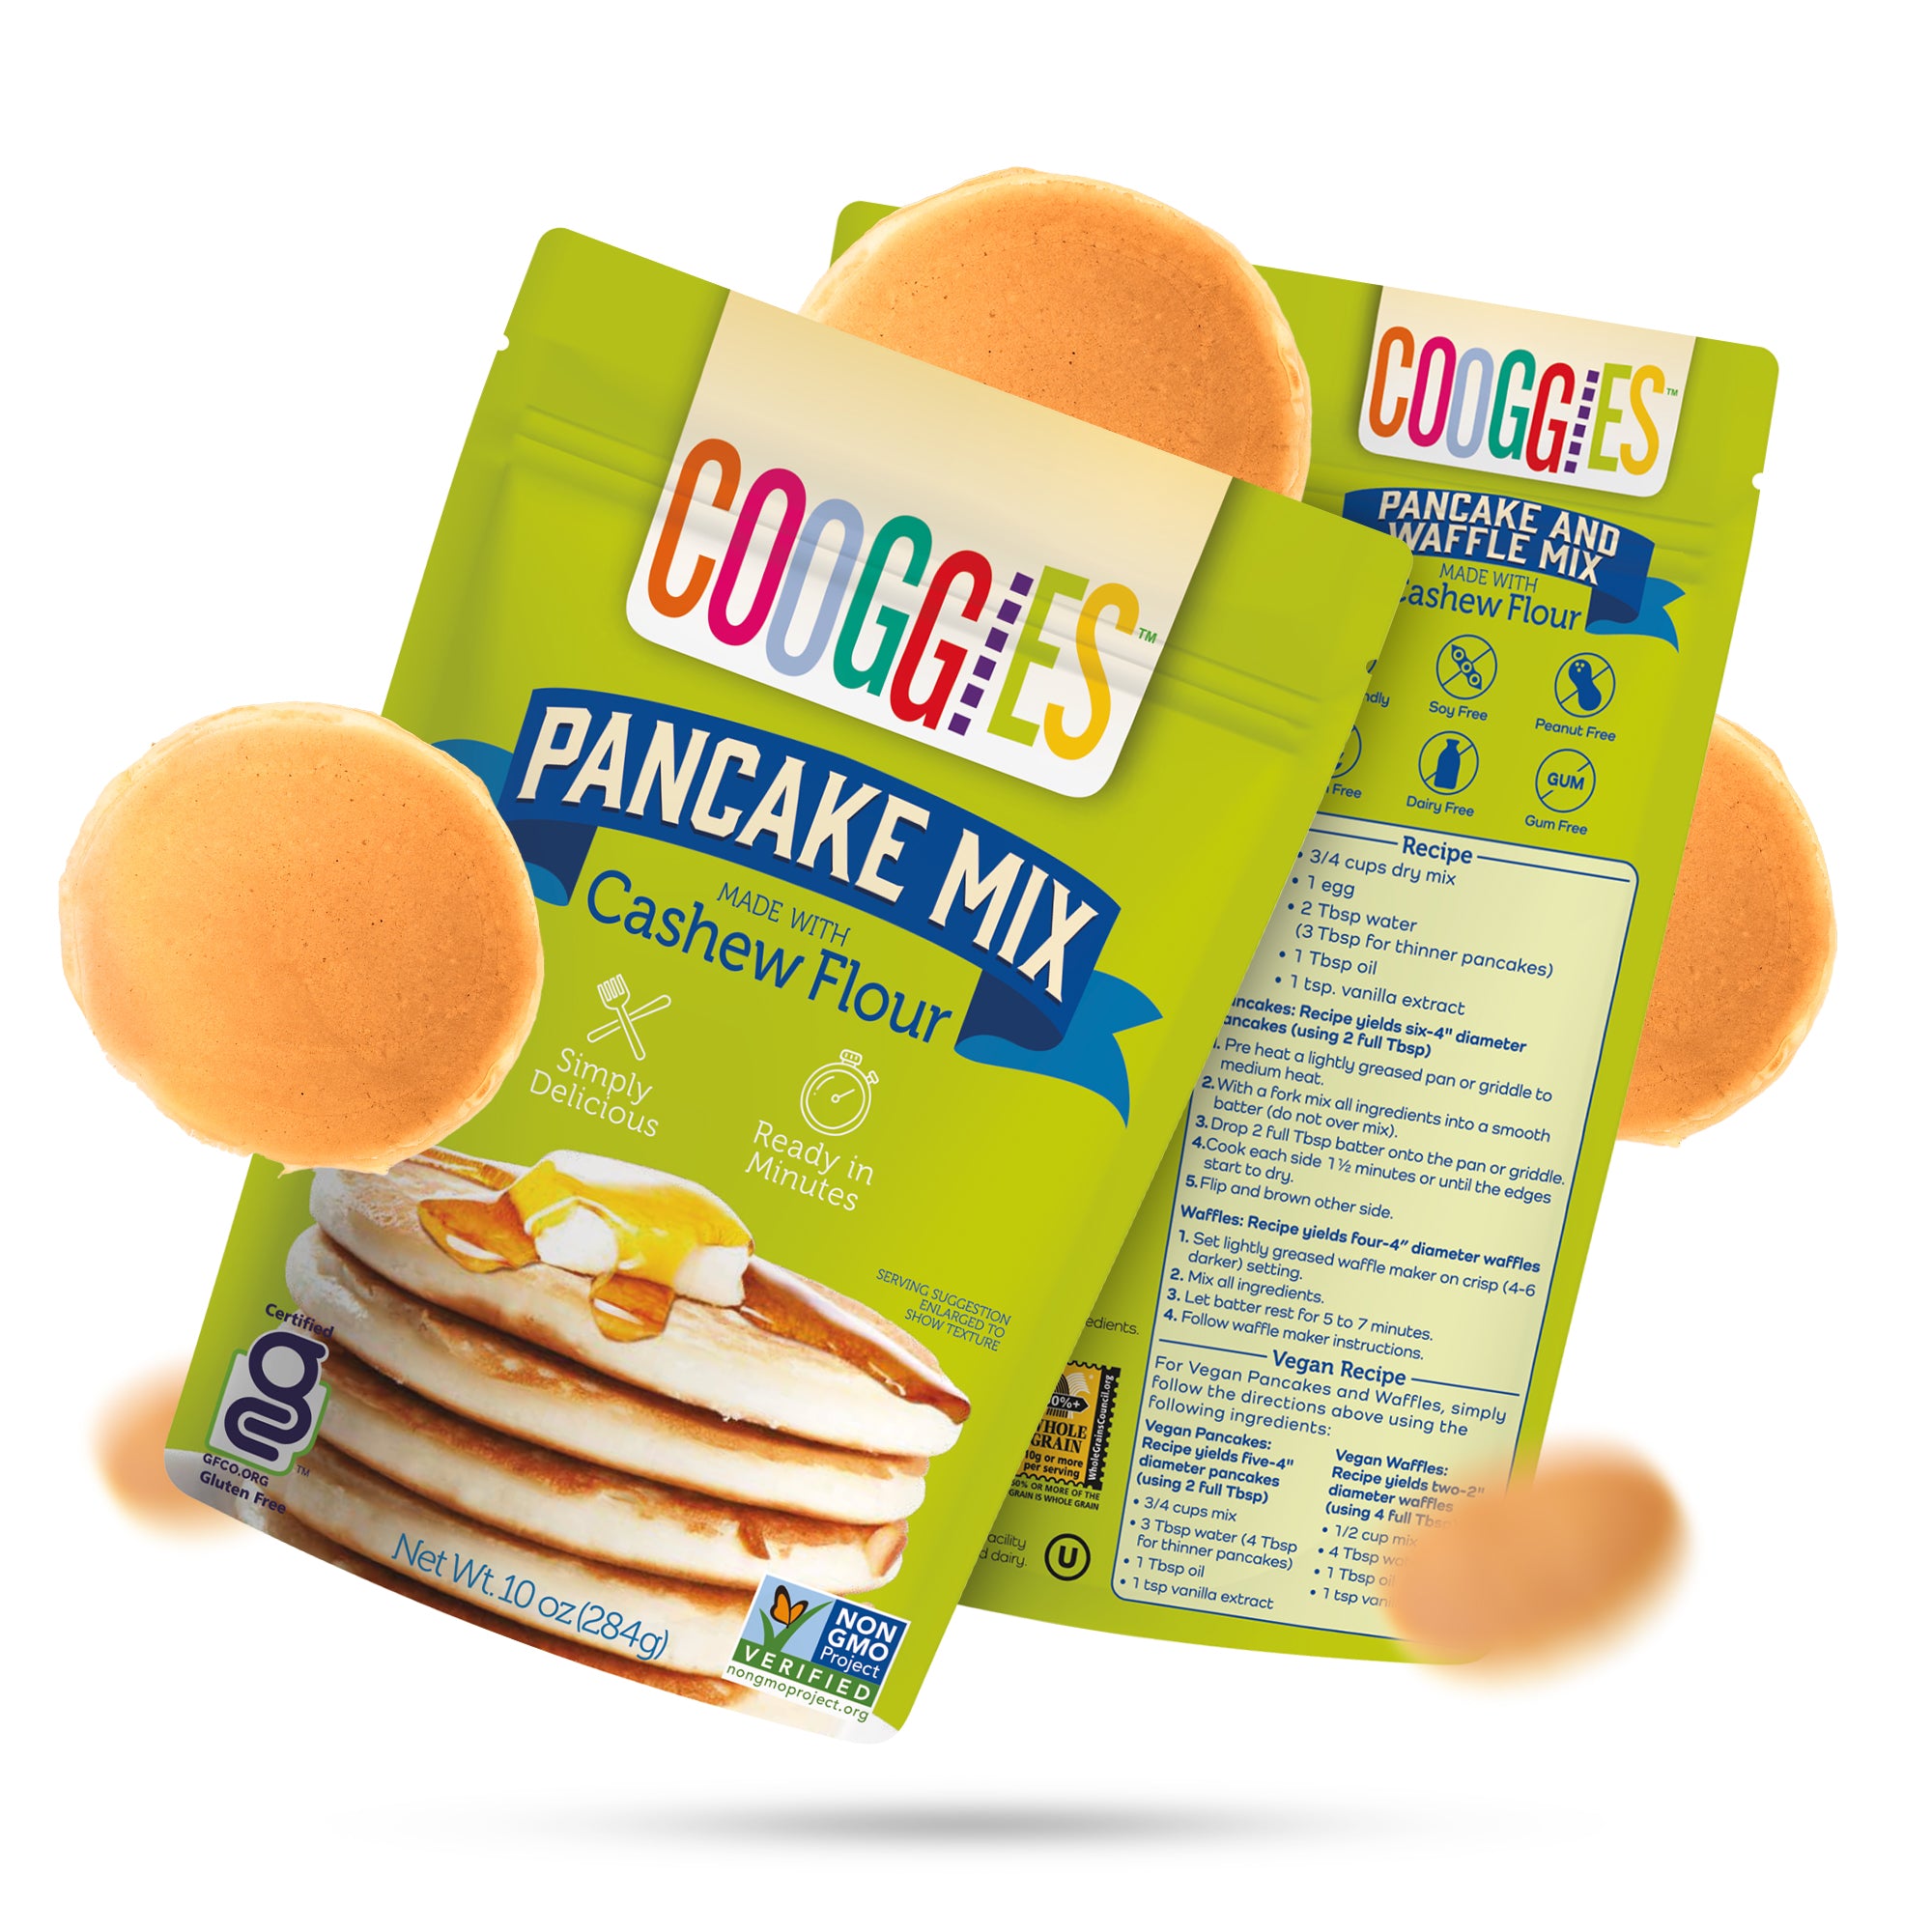 Cooggies Gluten Free Pancake & Waffle Mix. Vegan Friendly. Organic Cashew Flour. 10 oz., Size: 10oz